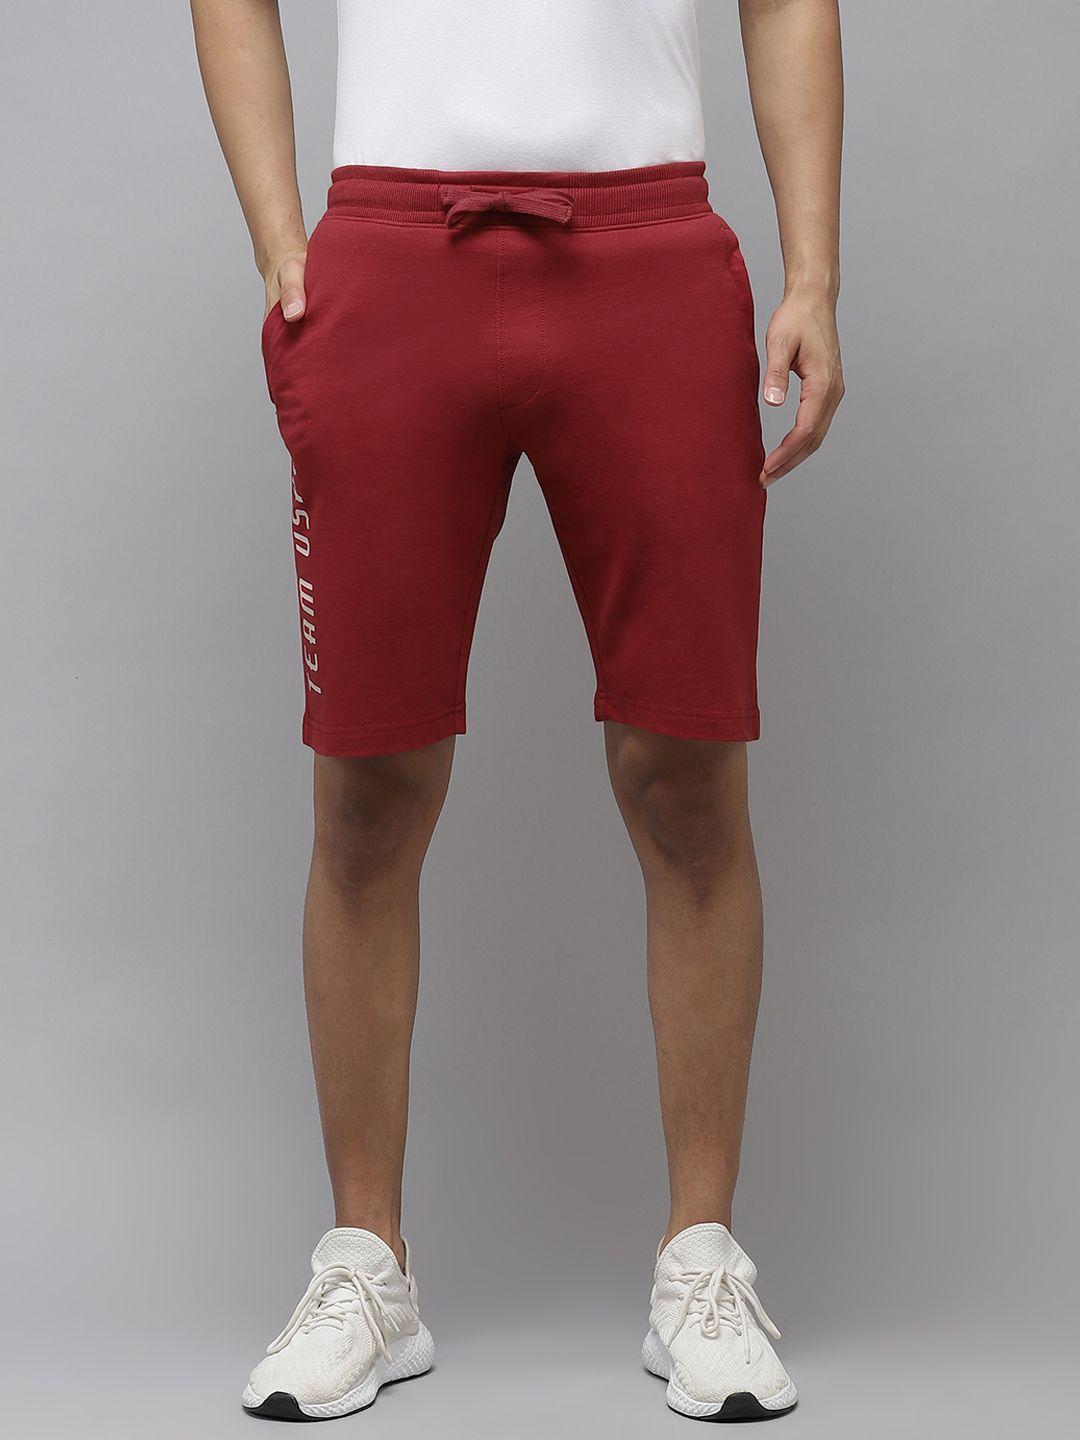 u-s-polo-assn-denim-co-men-maroon-typography-printed-shorts